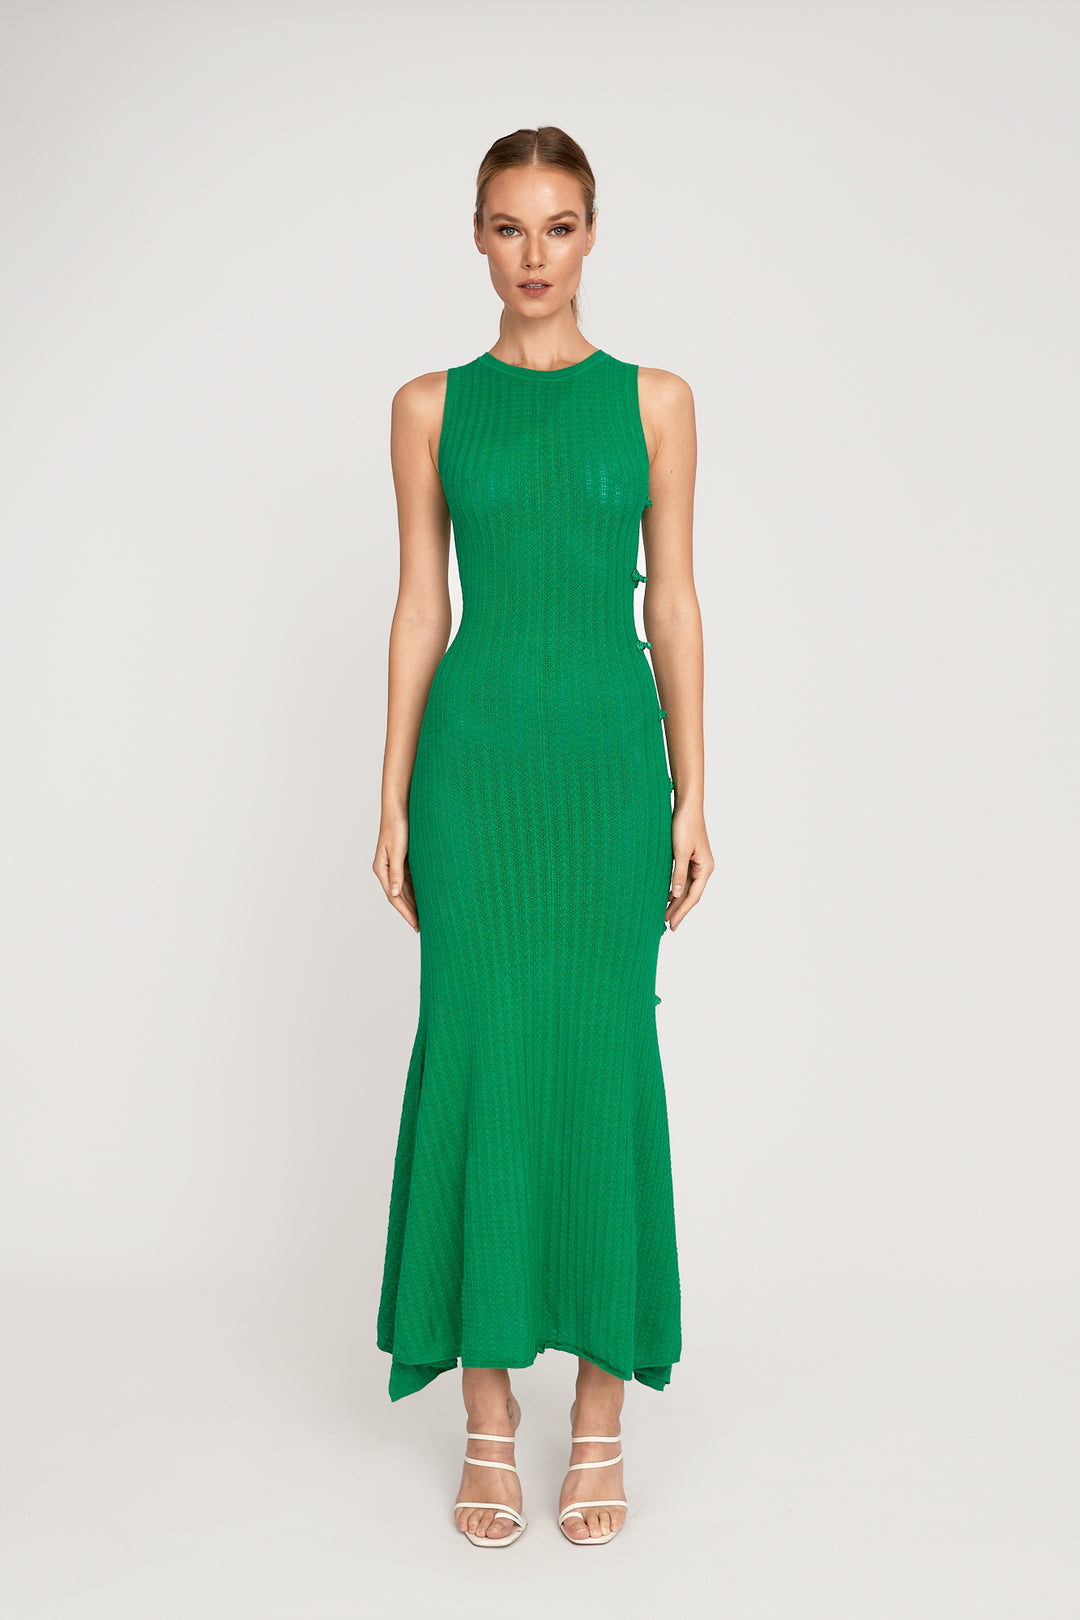 Angela Knit Dress - Green - SAU LEE